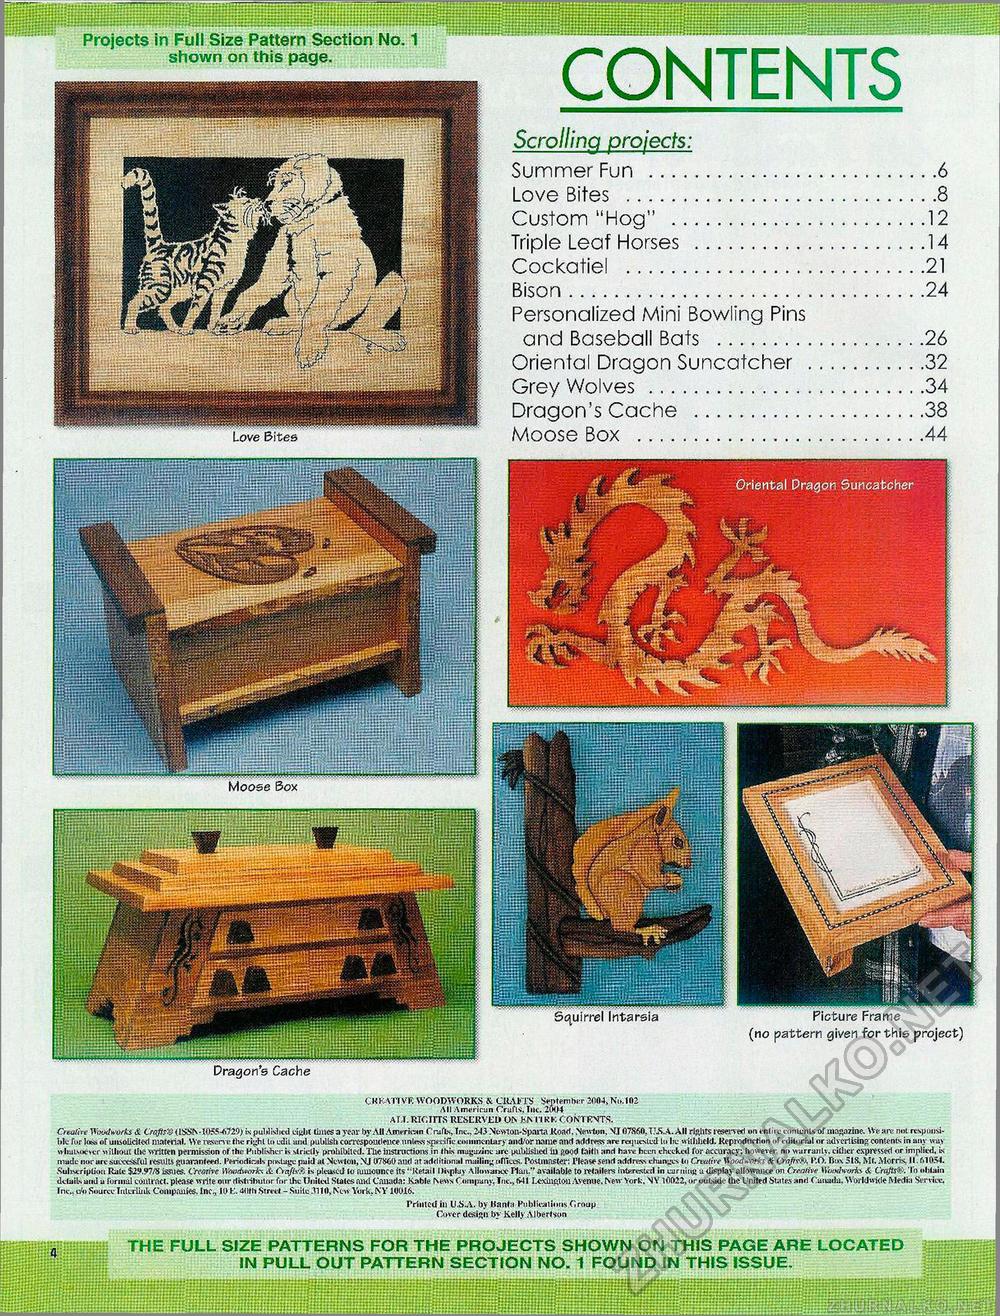 Creative Woodworks & crafts 2004-09,  4